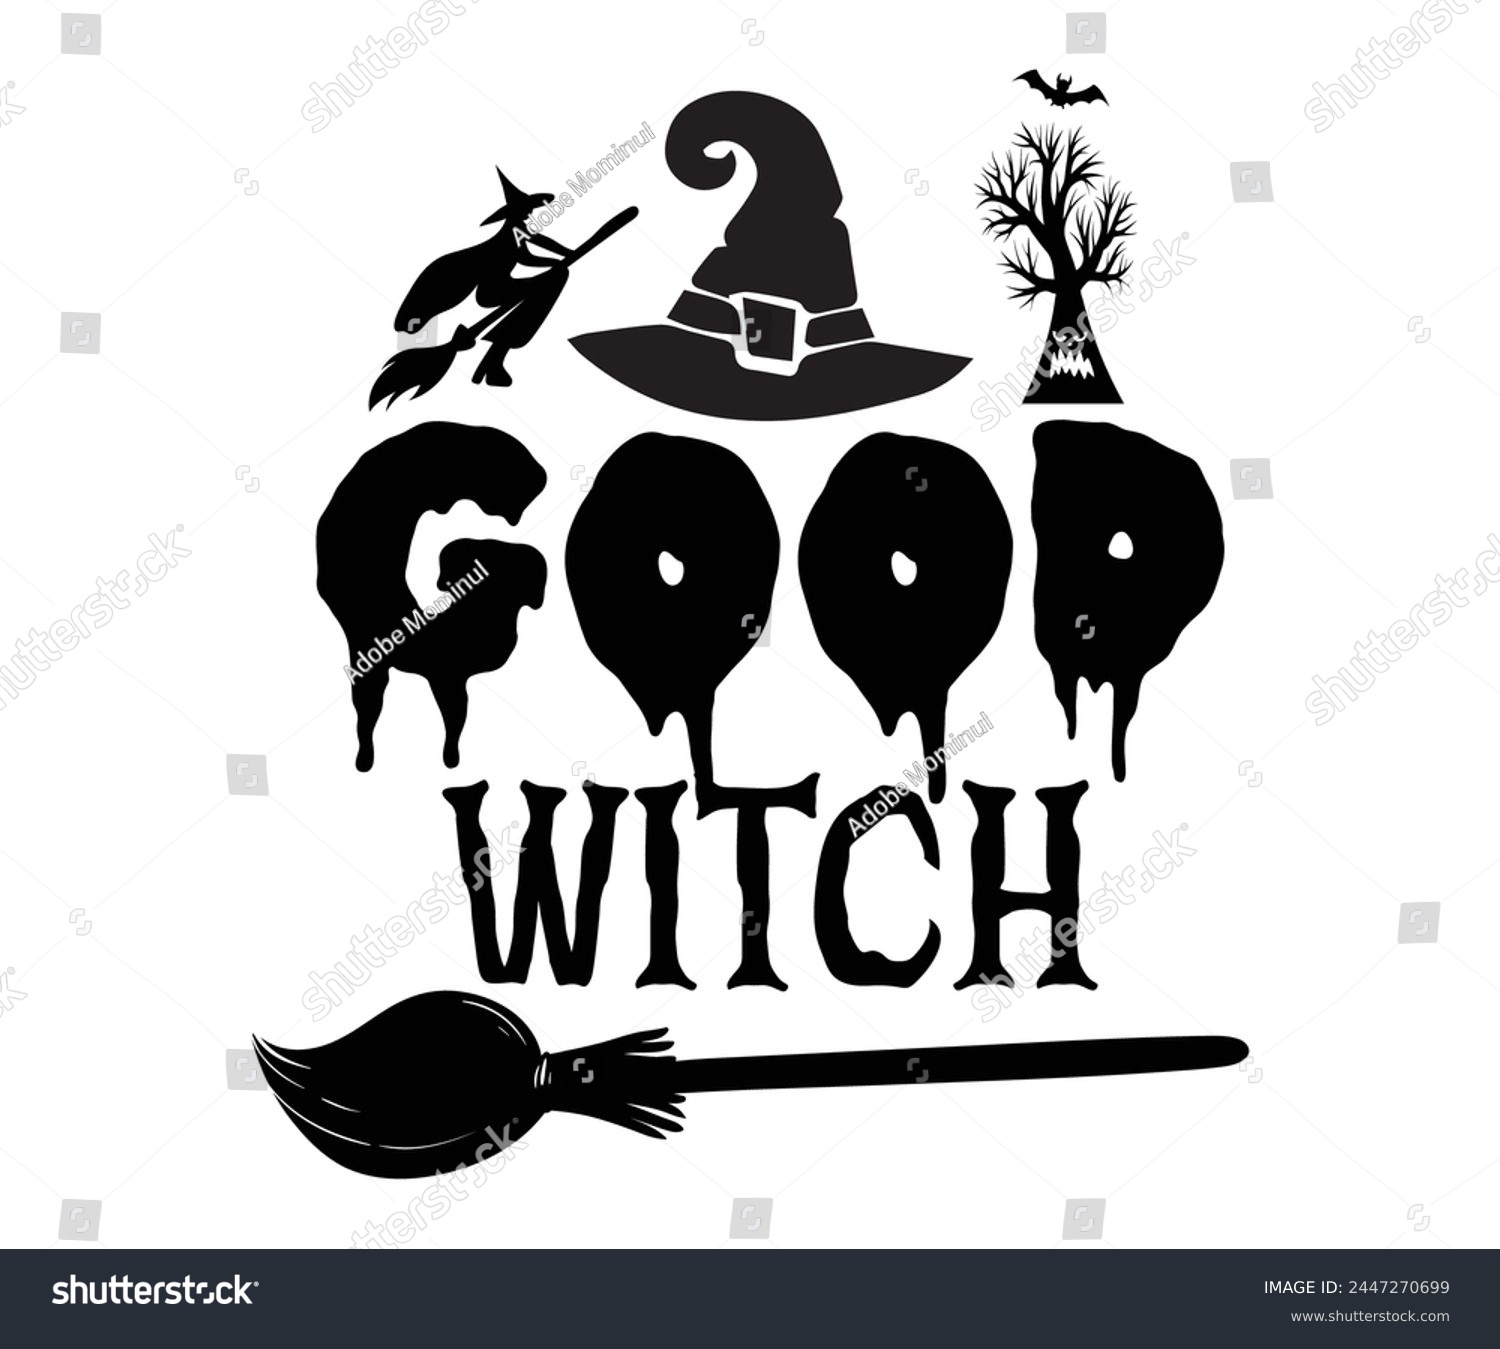 SVG of Good Witch Svg,Halloween Svg,Typography,Halloween Quotes,Witches Svg,Halloween Party,Halloween Costume,Halloween Gift,Funny Halloween,Spooky Svg,Funny T shirt,Ghost Svg,Cut file svg